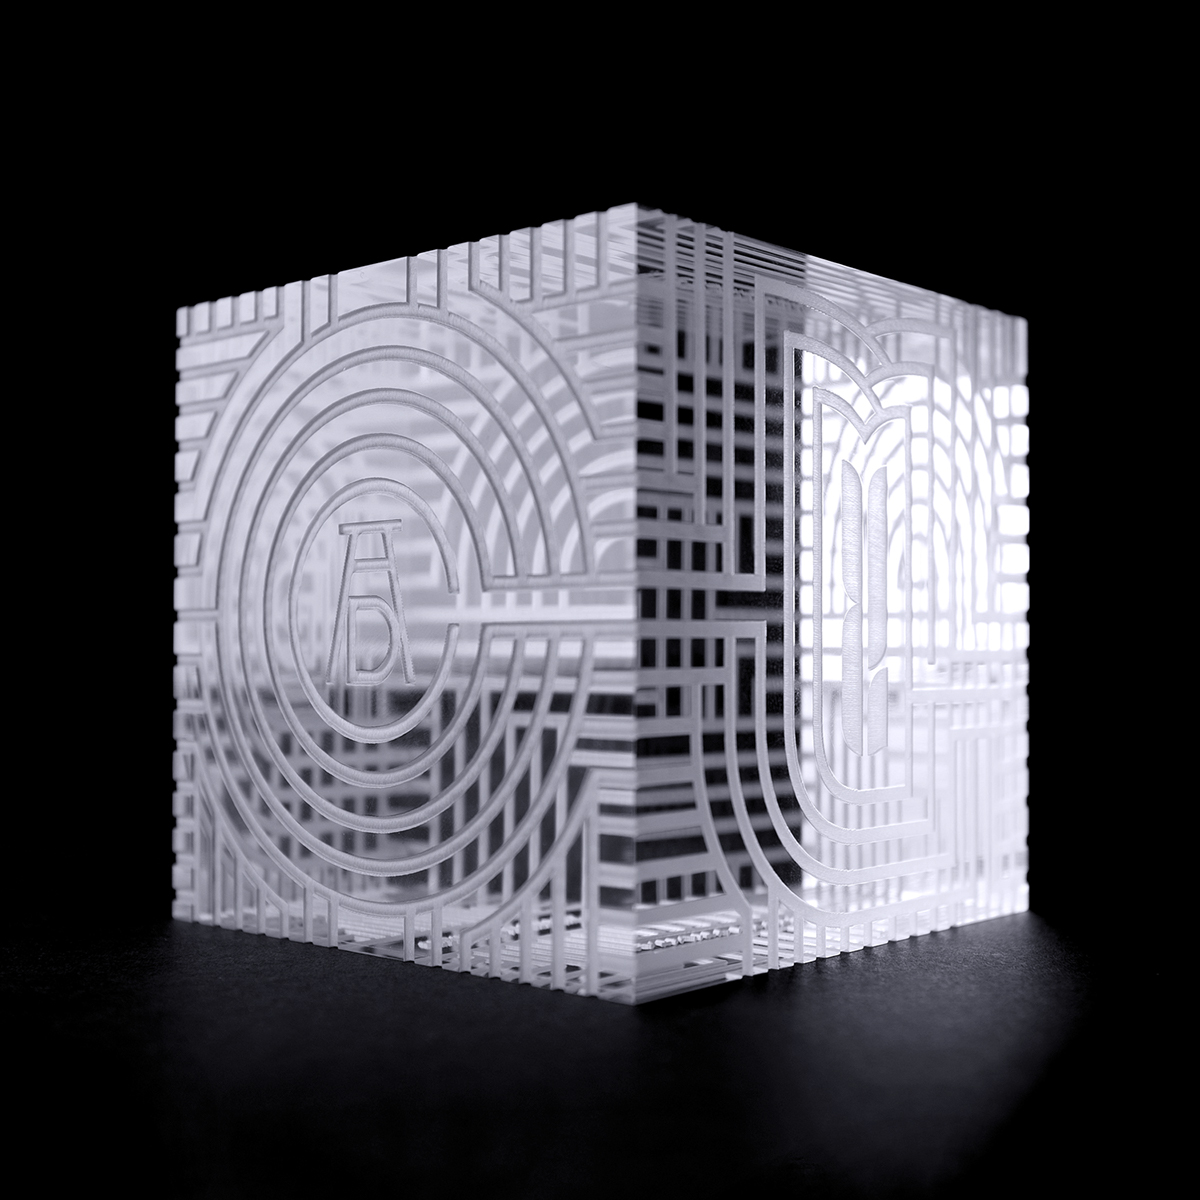 ADC Art Directors Art Directors Club Young Guns YG12 award cube Laser-Cut laser pattern geometric acrylic trophy